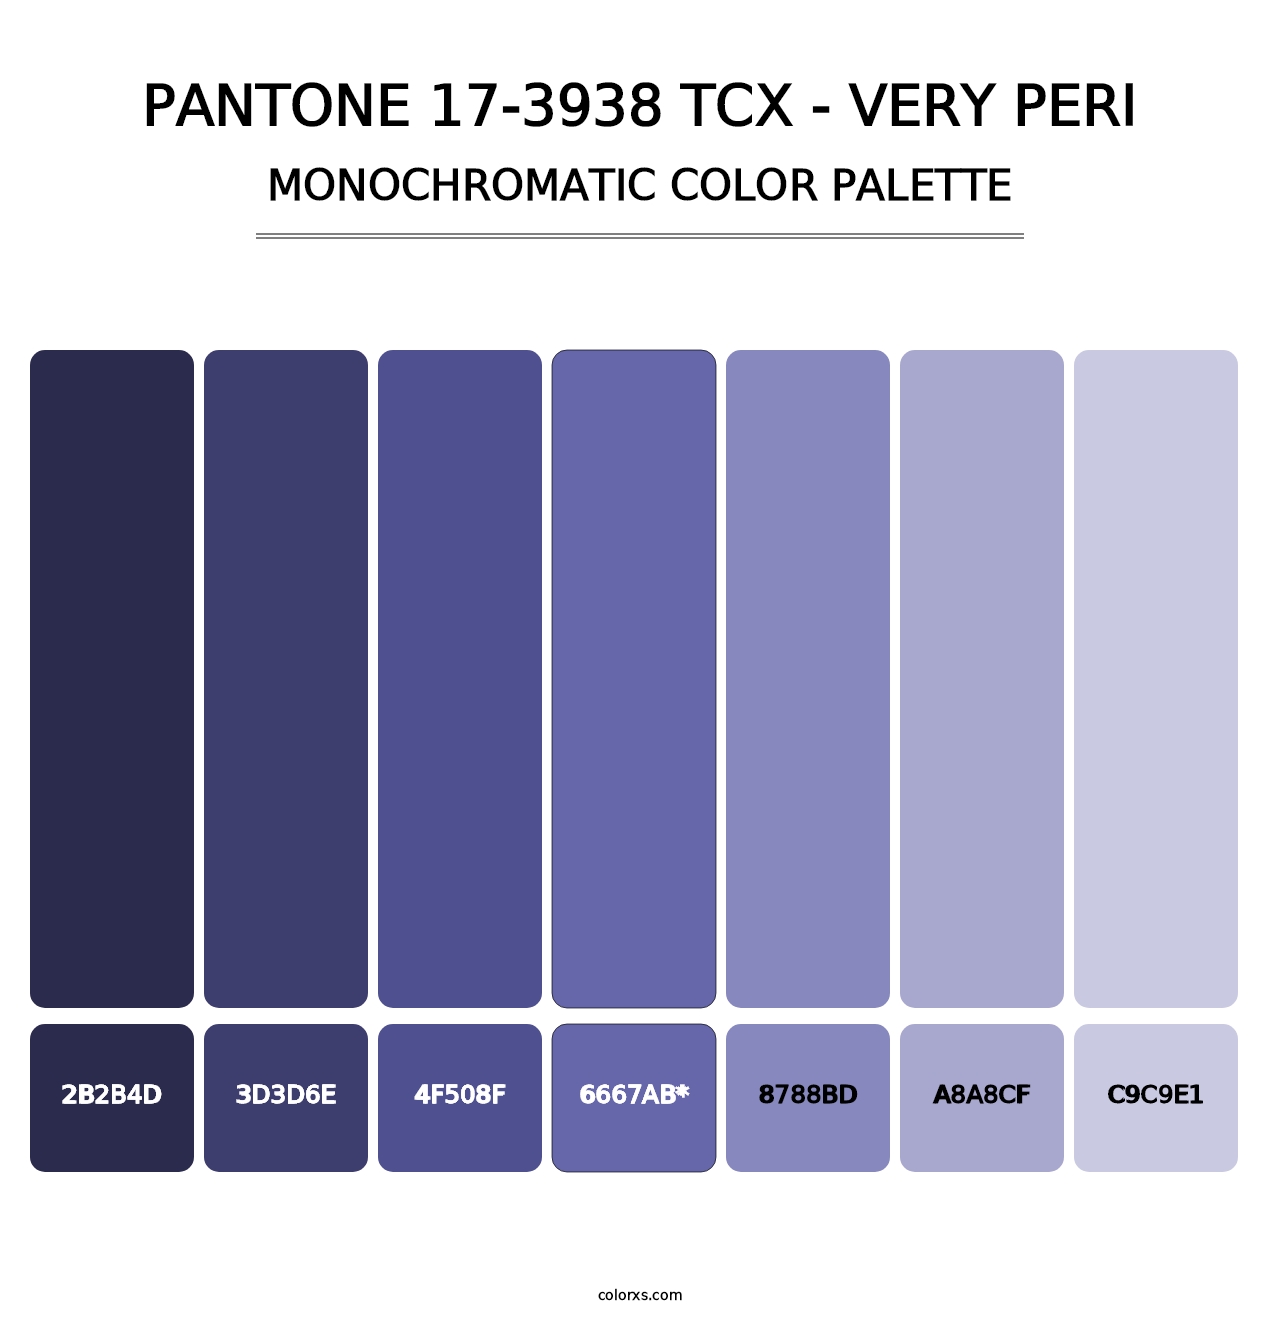 PANTONE 17-3938 TCX - Very Peri - Monochromatic Color Palette